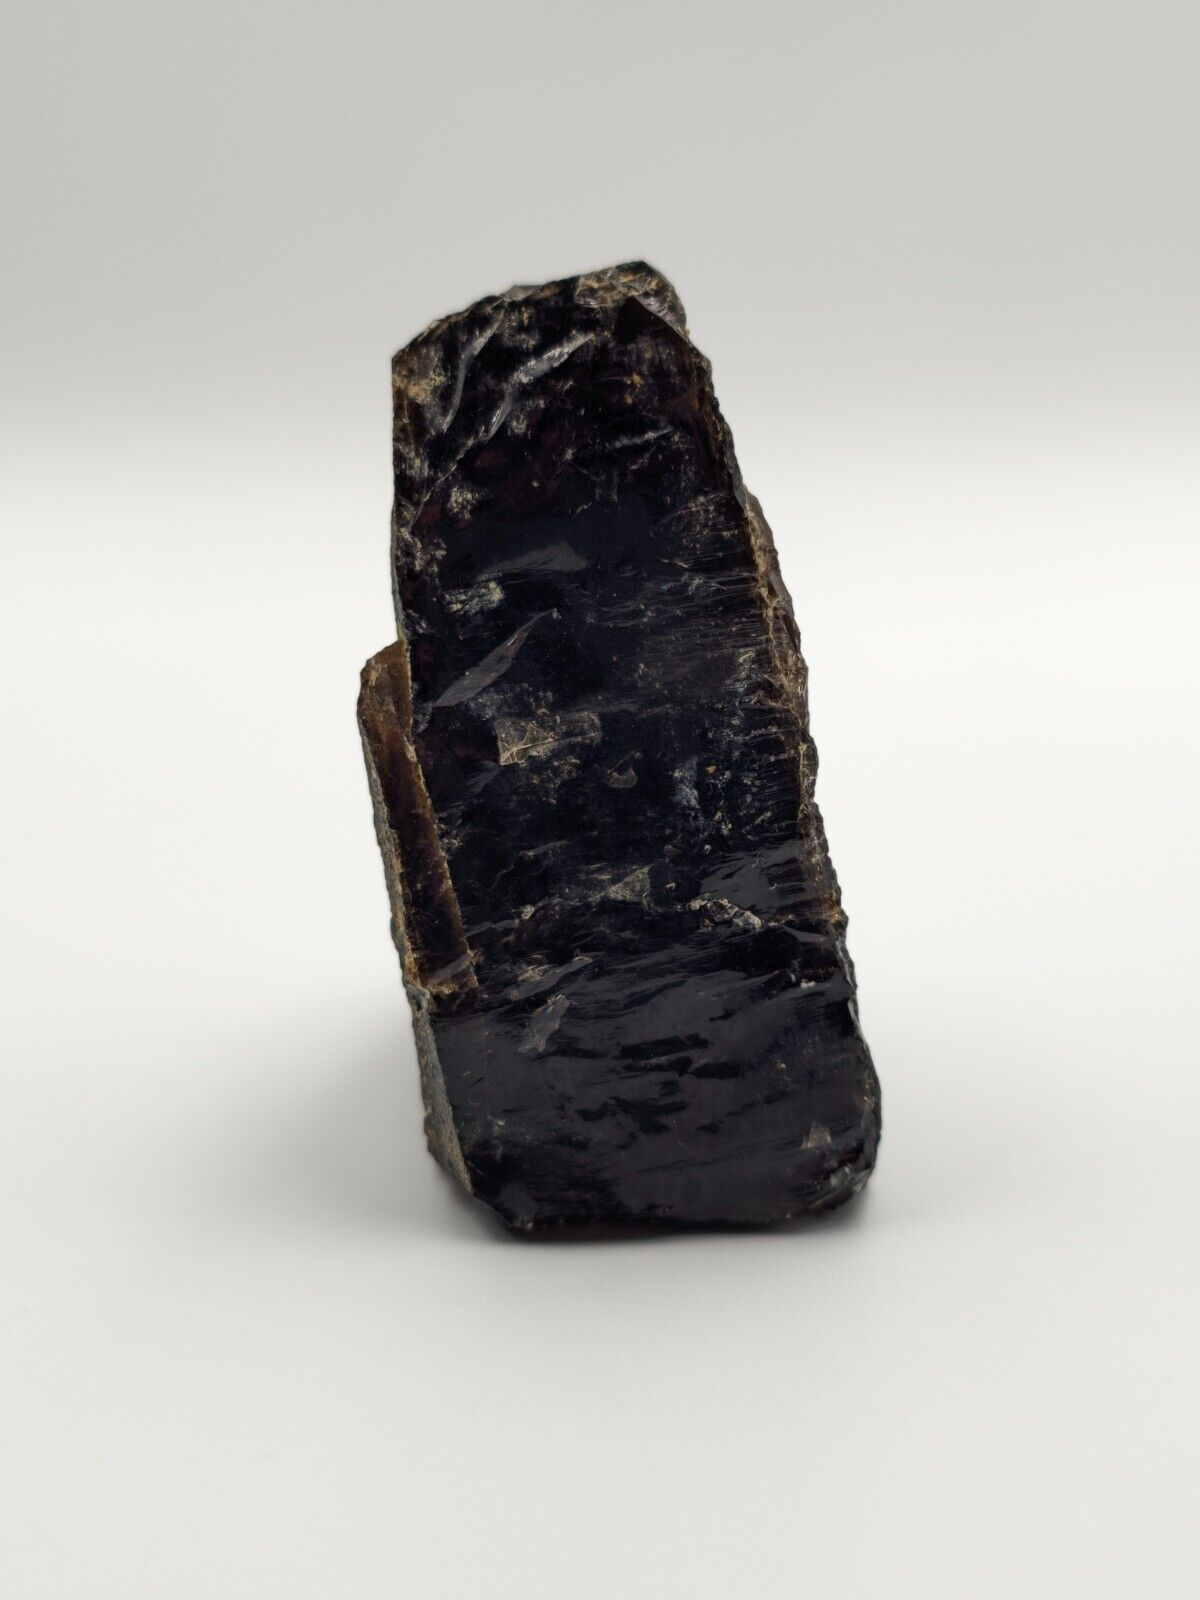 Rare 614ct. Morion Quartz Crystal - Volodarsko Deposit Gem